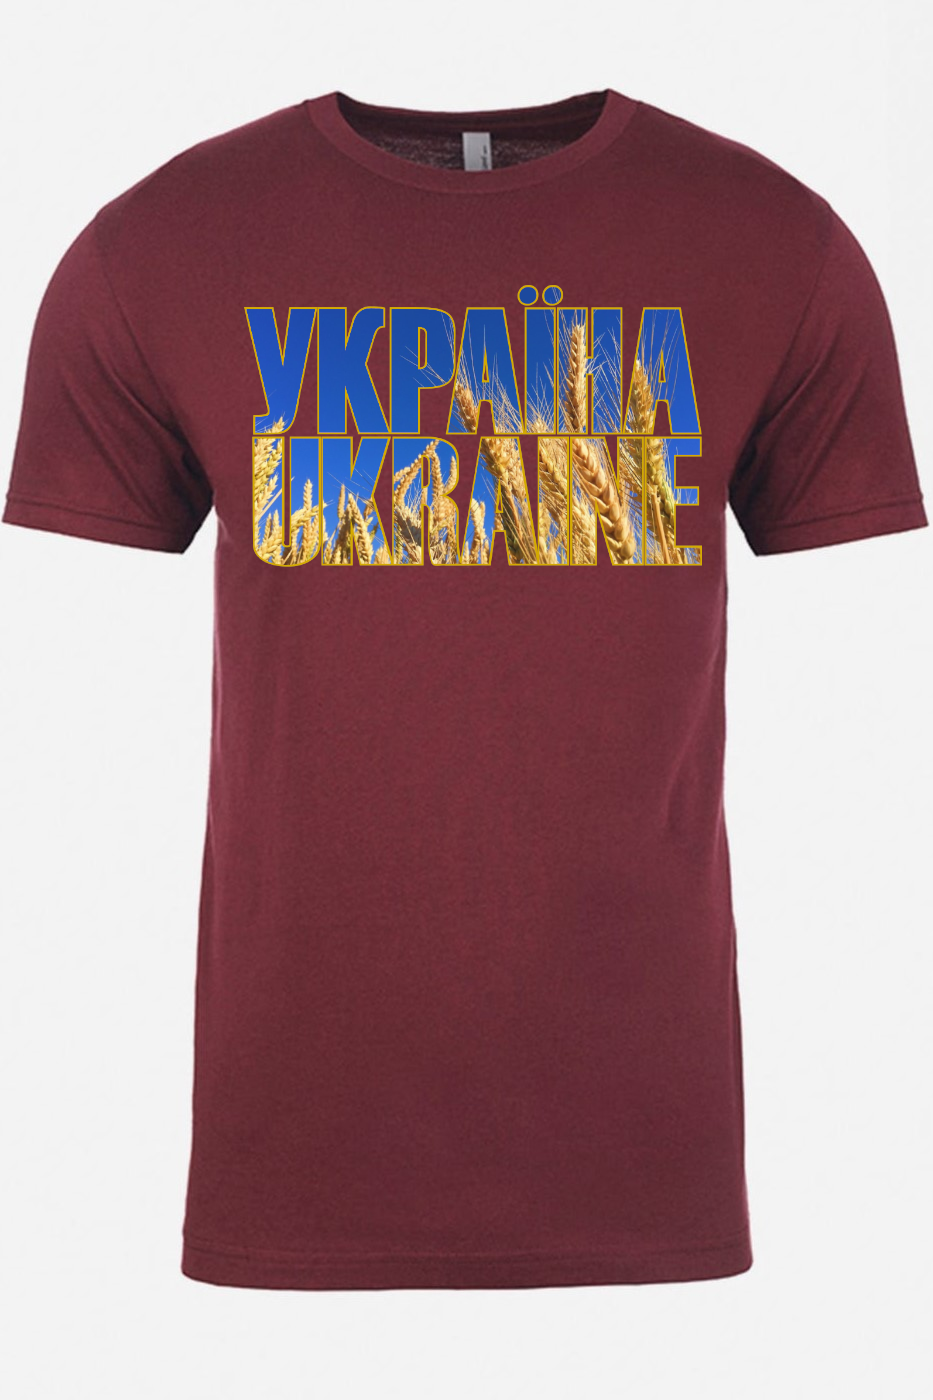 Adult t-shirt "Україна Ukraine"